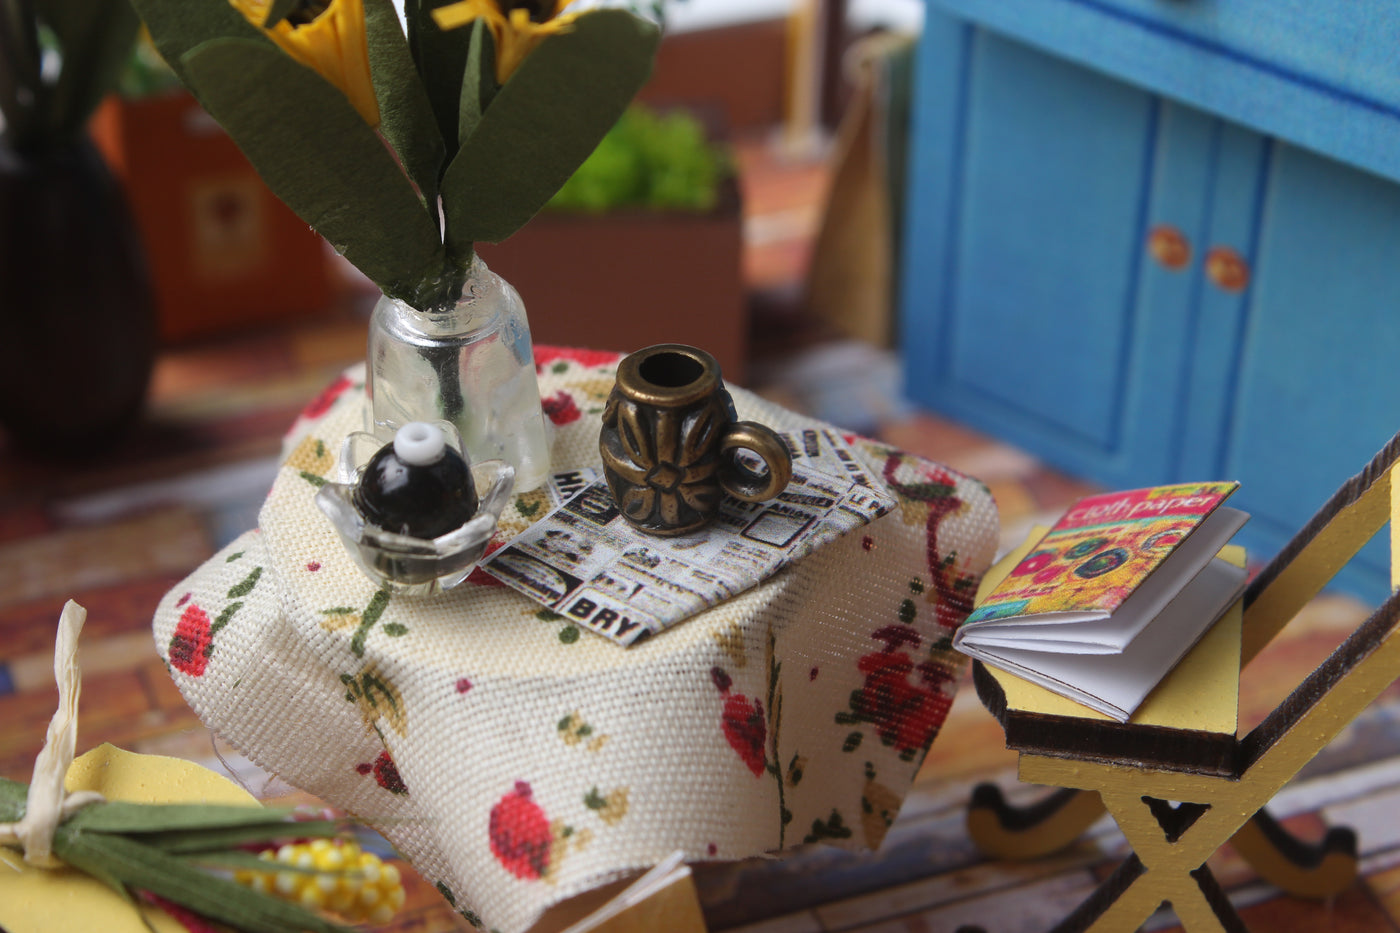 Kit de bricolage maison miniature Star Garden Cafe